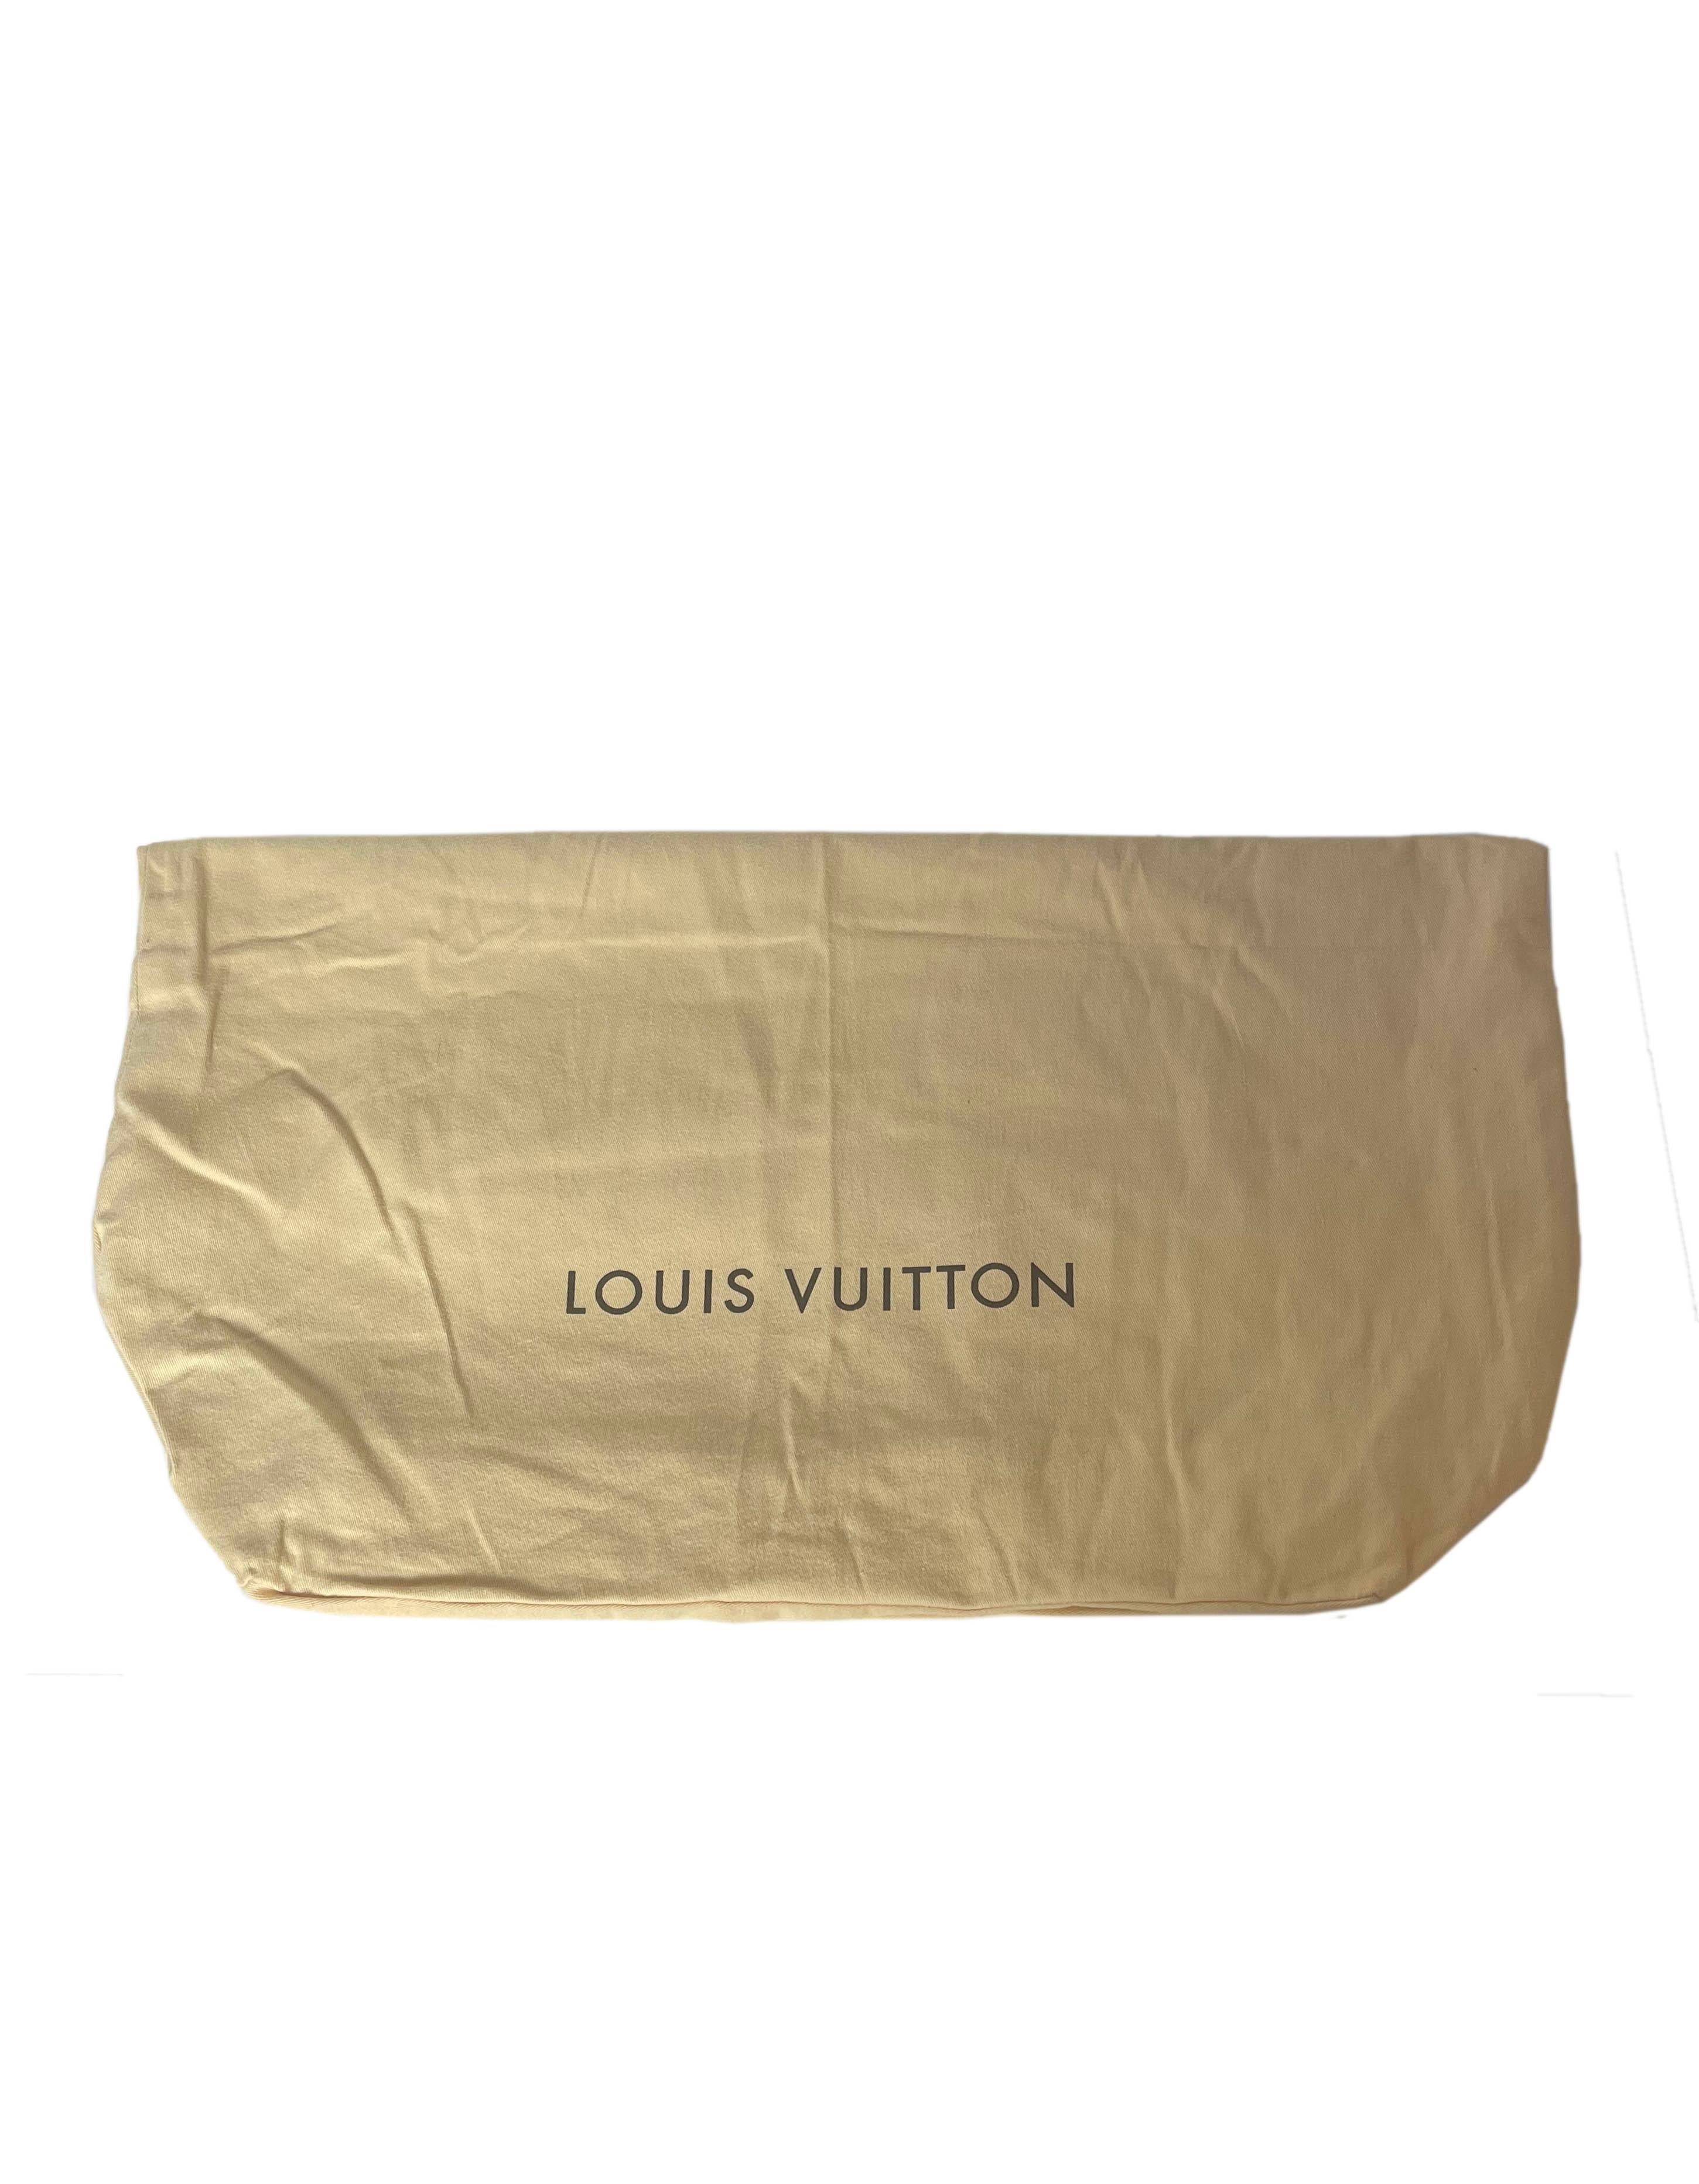 Louis Vuitton Monogram President Classeur Hard Briefcase Bag rt. $8, 650 4